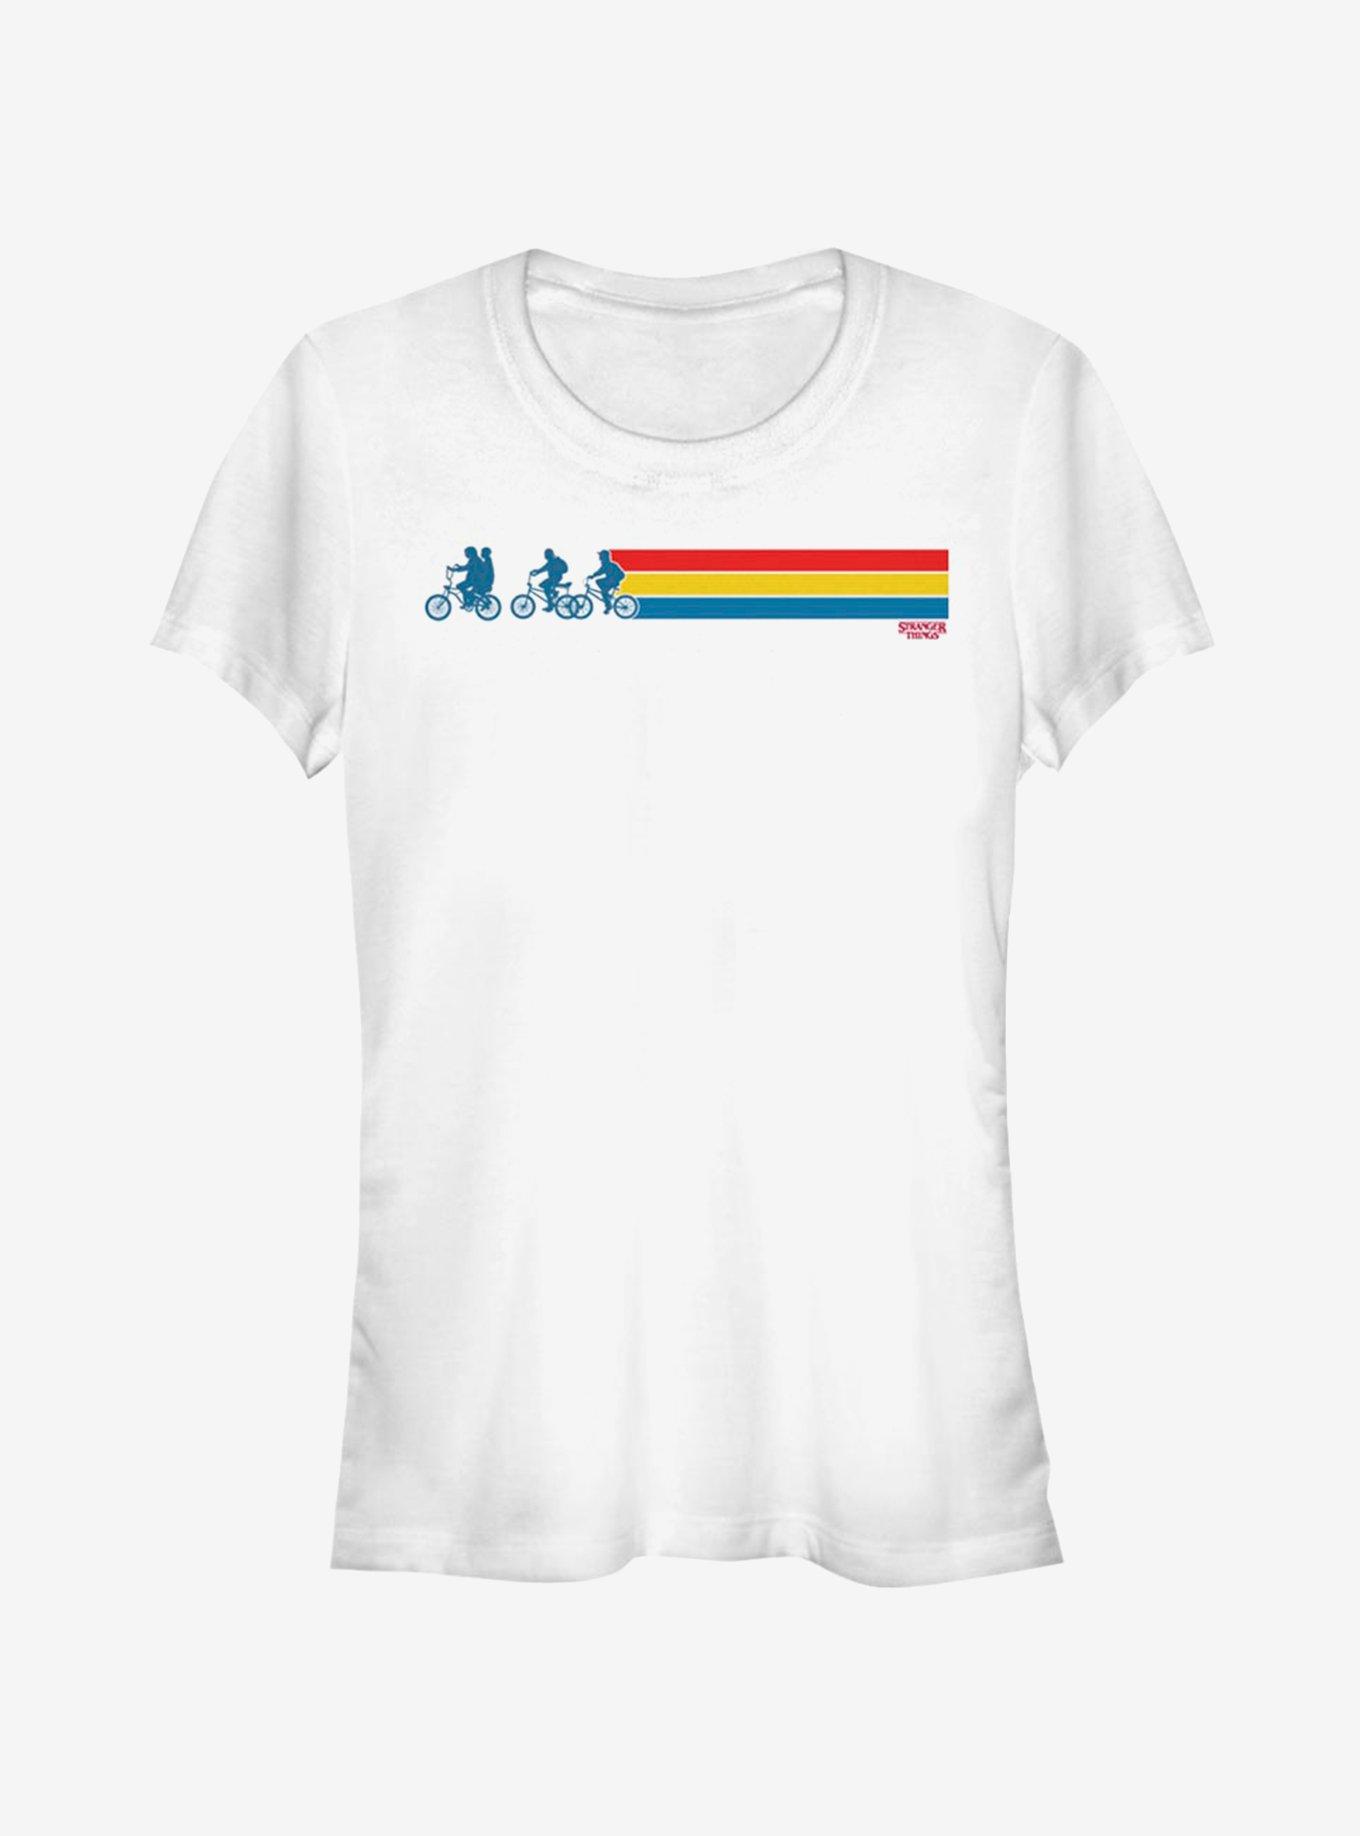 Stranger Things Bikes and Stripes Girls T-Shirt, WHITE, hi-res